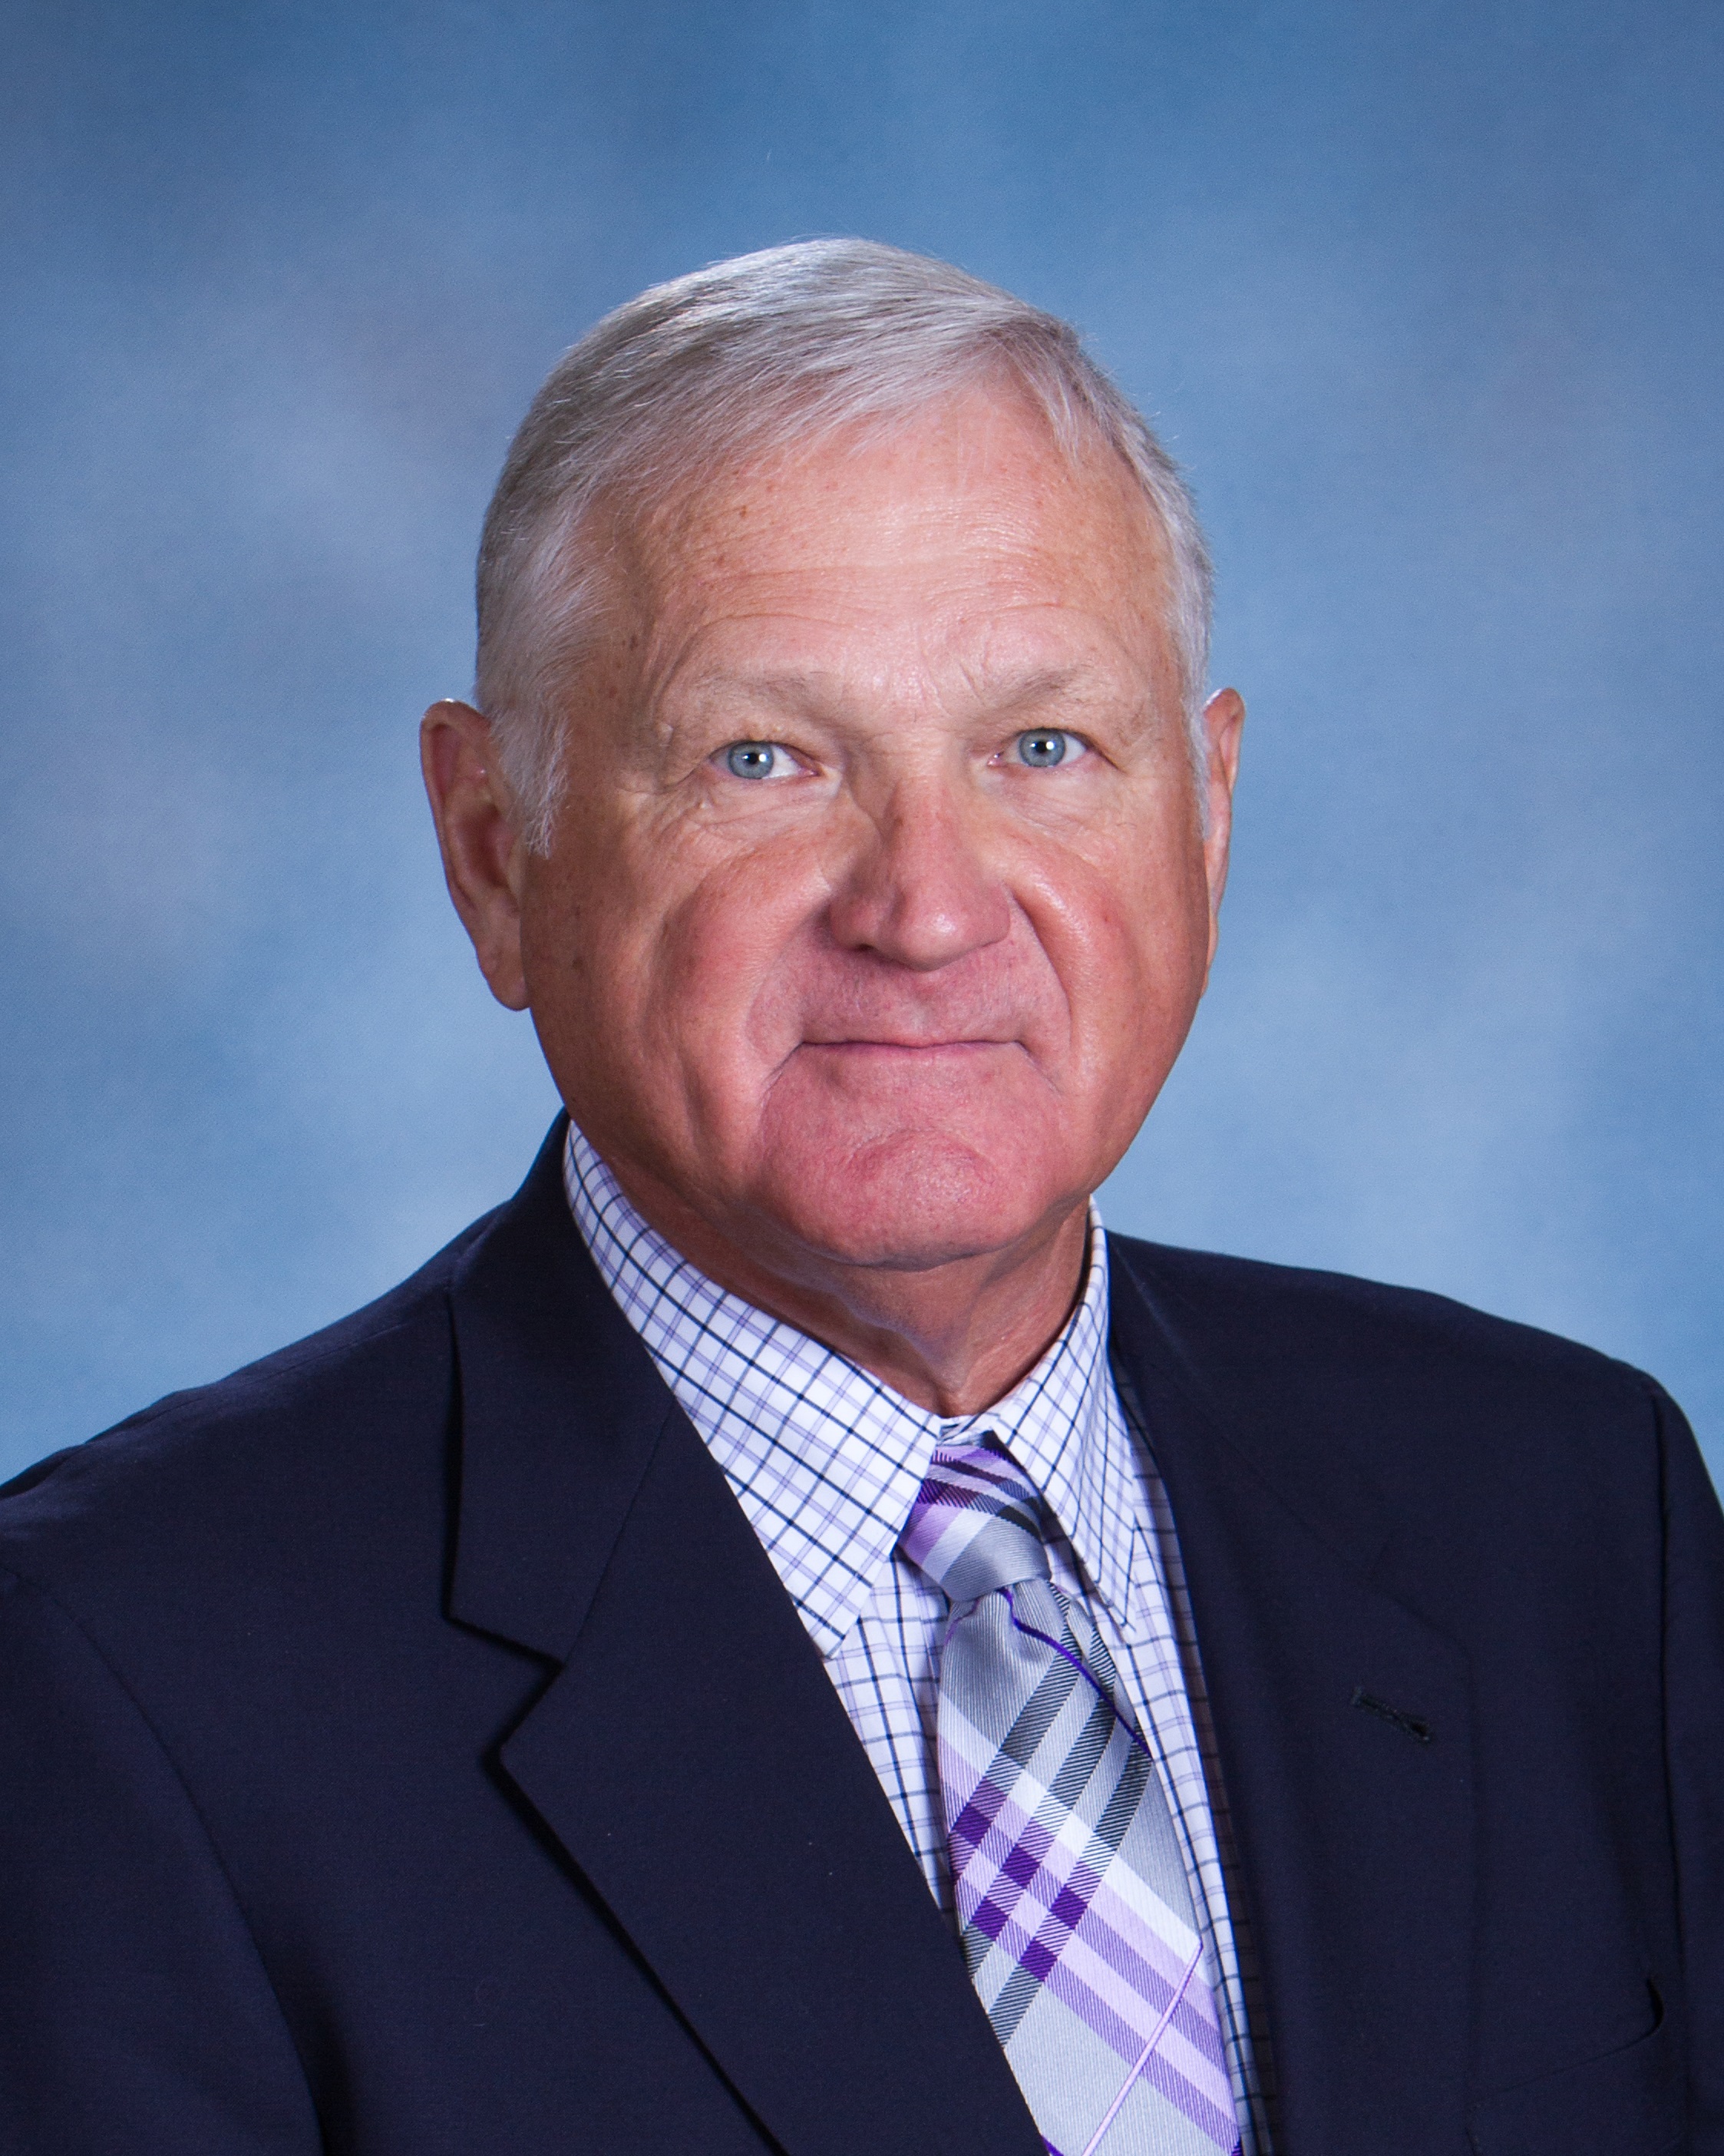 Transgender: Jim Tenopir (headshot), executive director of Nebraska School Activities Association, serious-looking man with gray hair, dark jacket, checked shirt, striped tie.